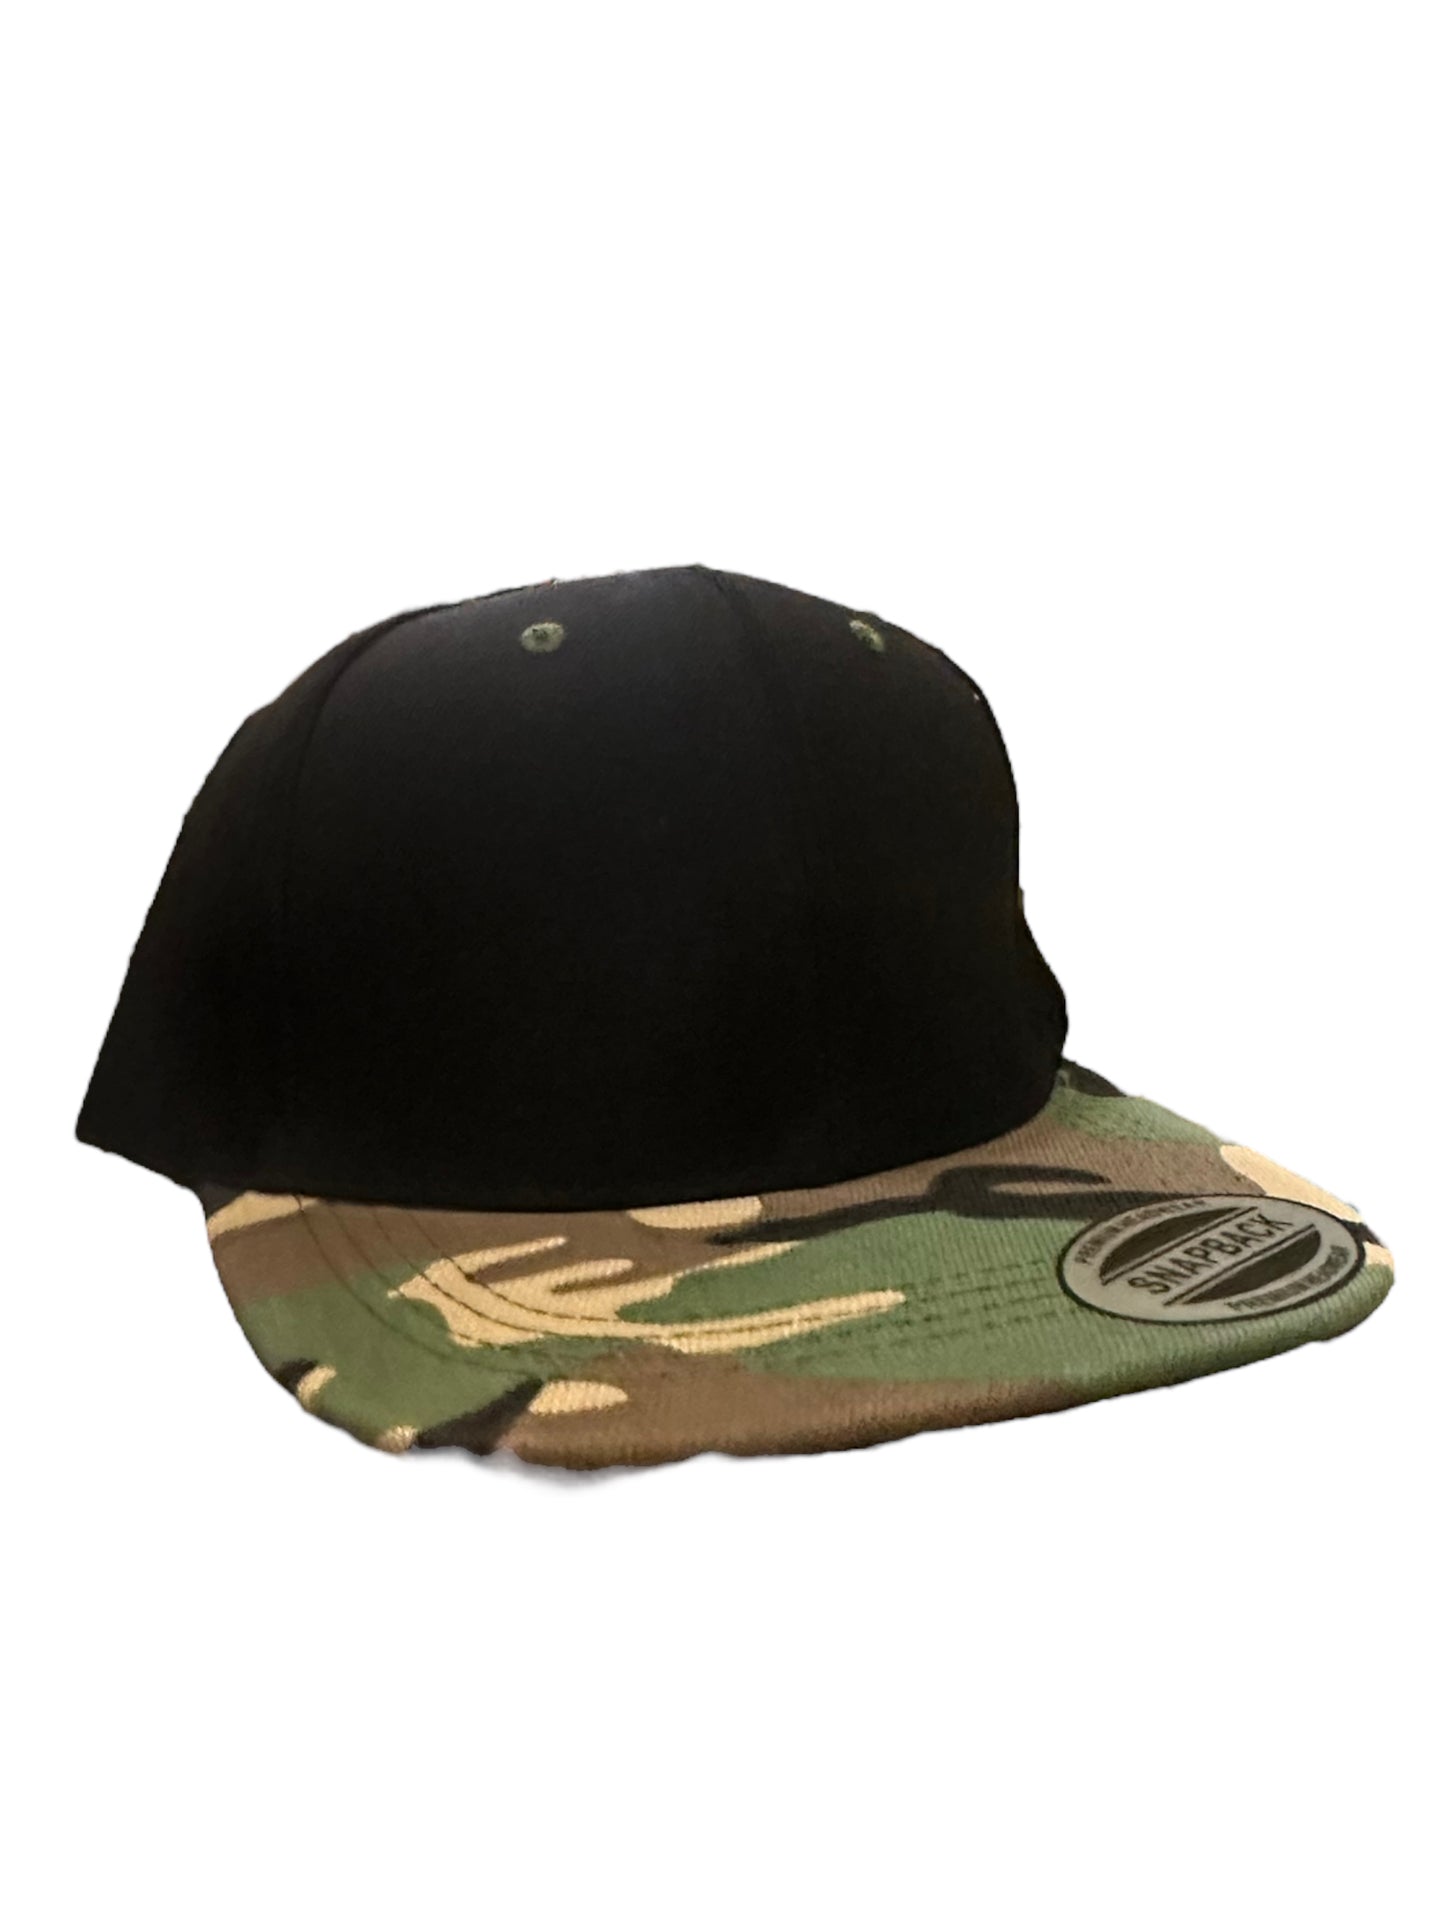 Black crown/ Combat Camouflage bill SnapBacks